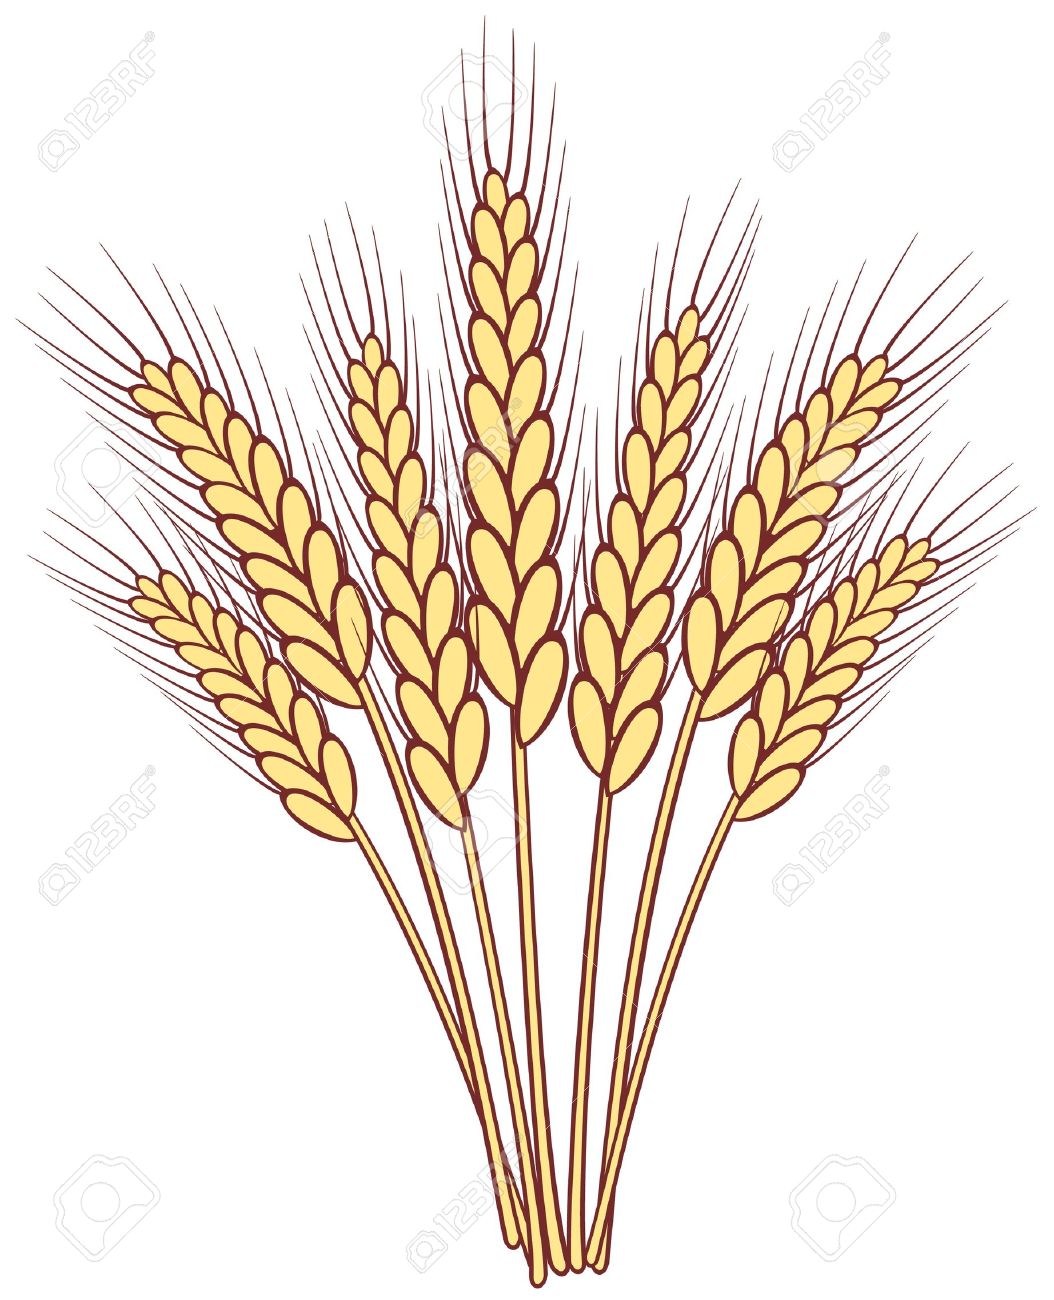 Clipart wheat stalk - Clipart